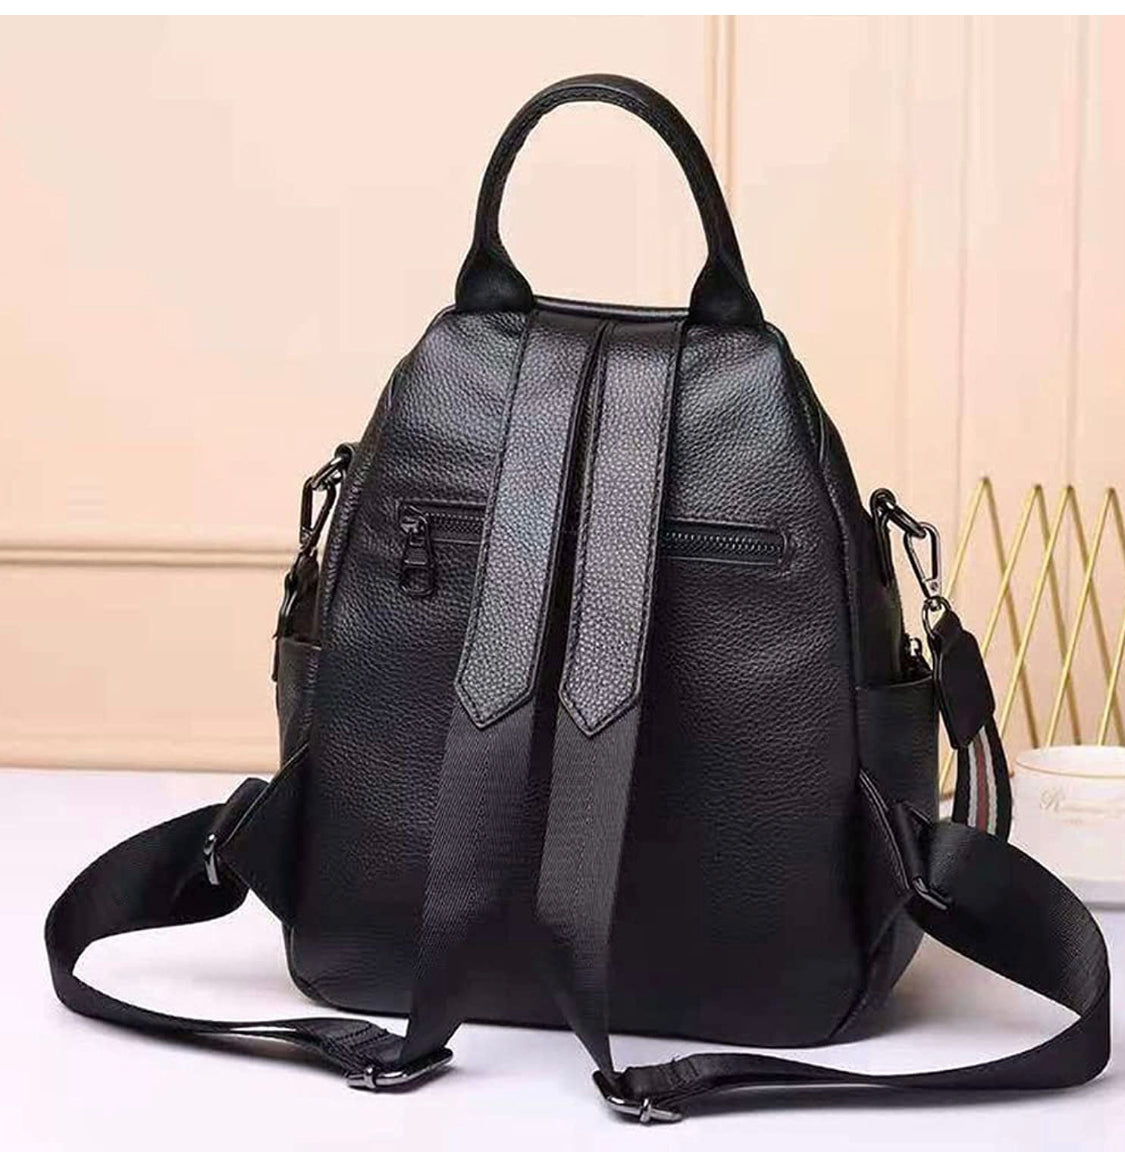 Fossil Small Black Leather Mini Backpack Purse | eBay